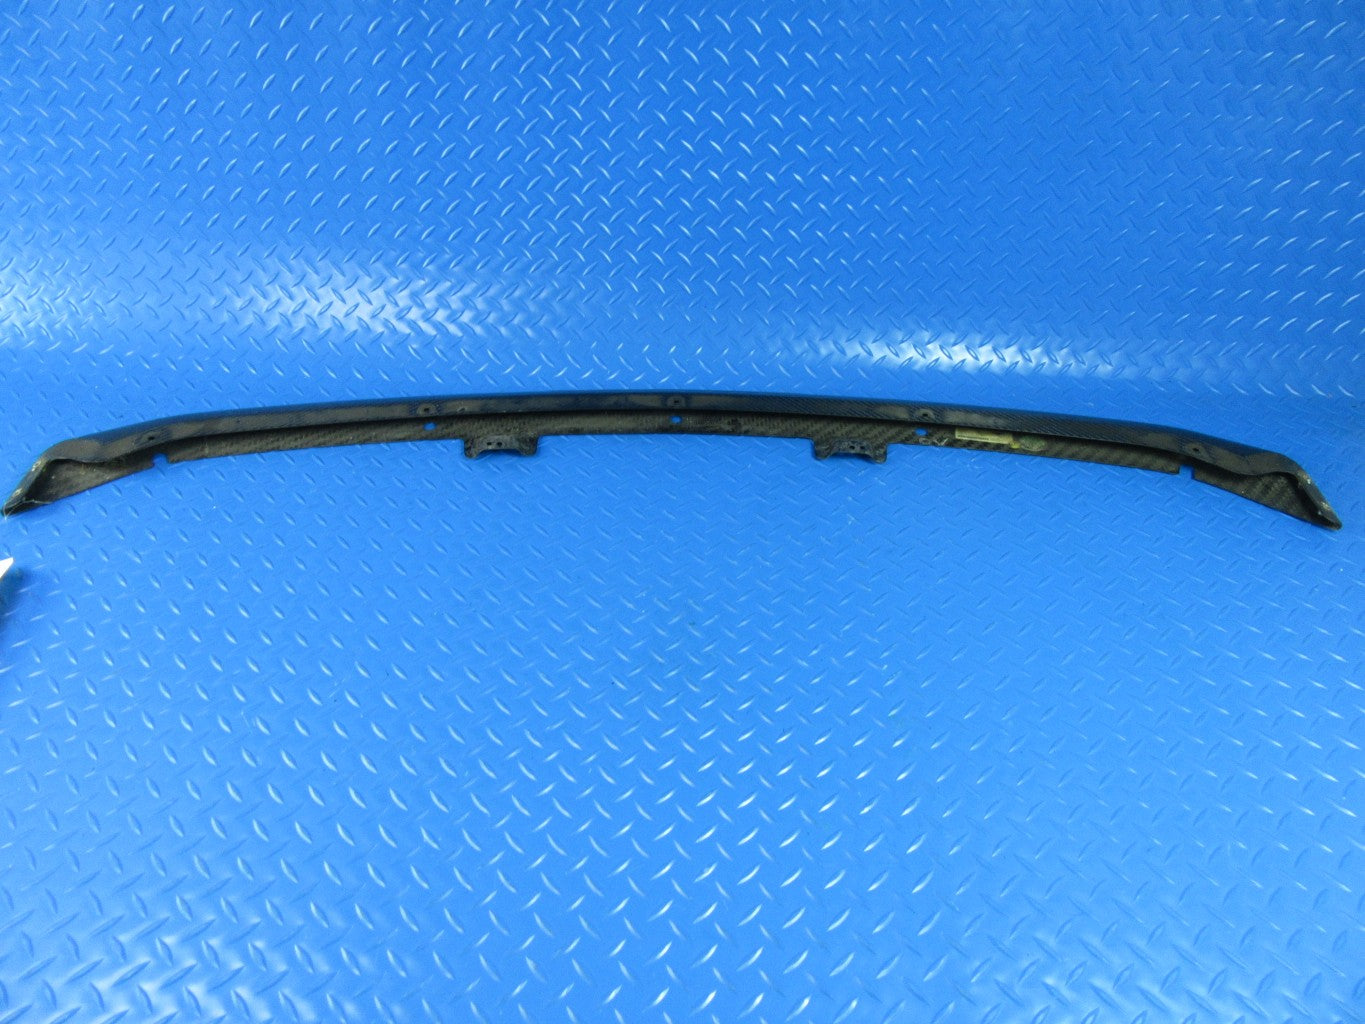 Bentley Gt GTc Supersports front bumper lower carbon lip spoiler #0731